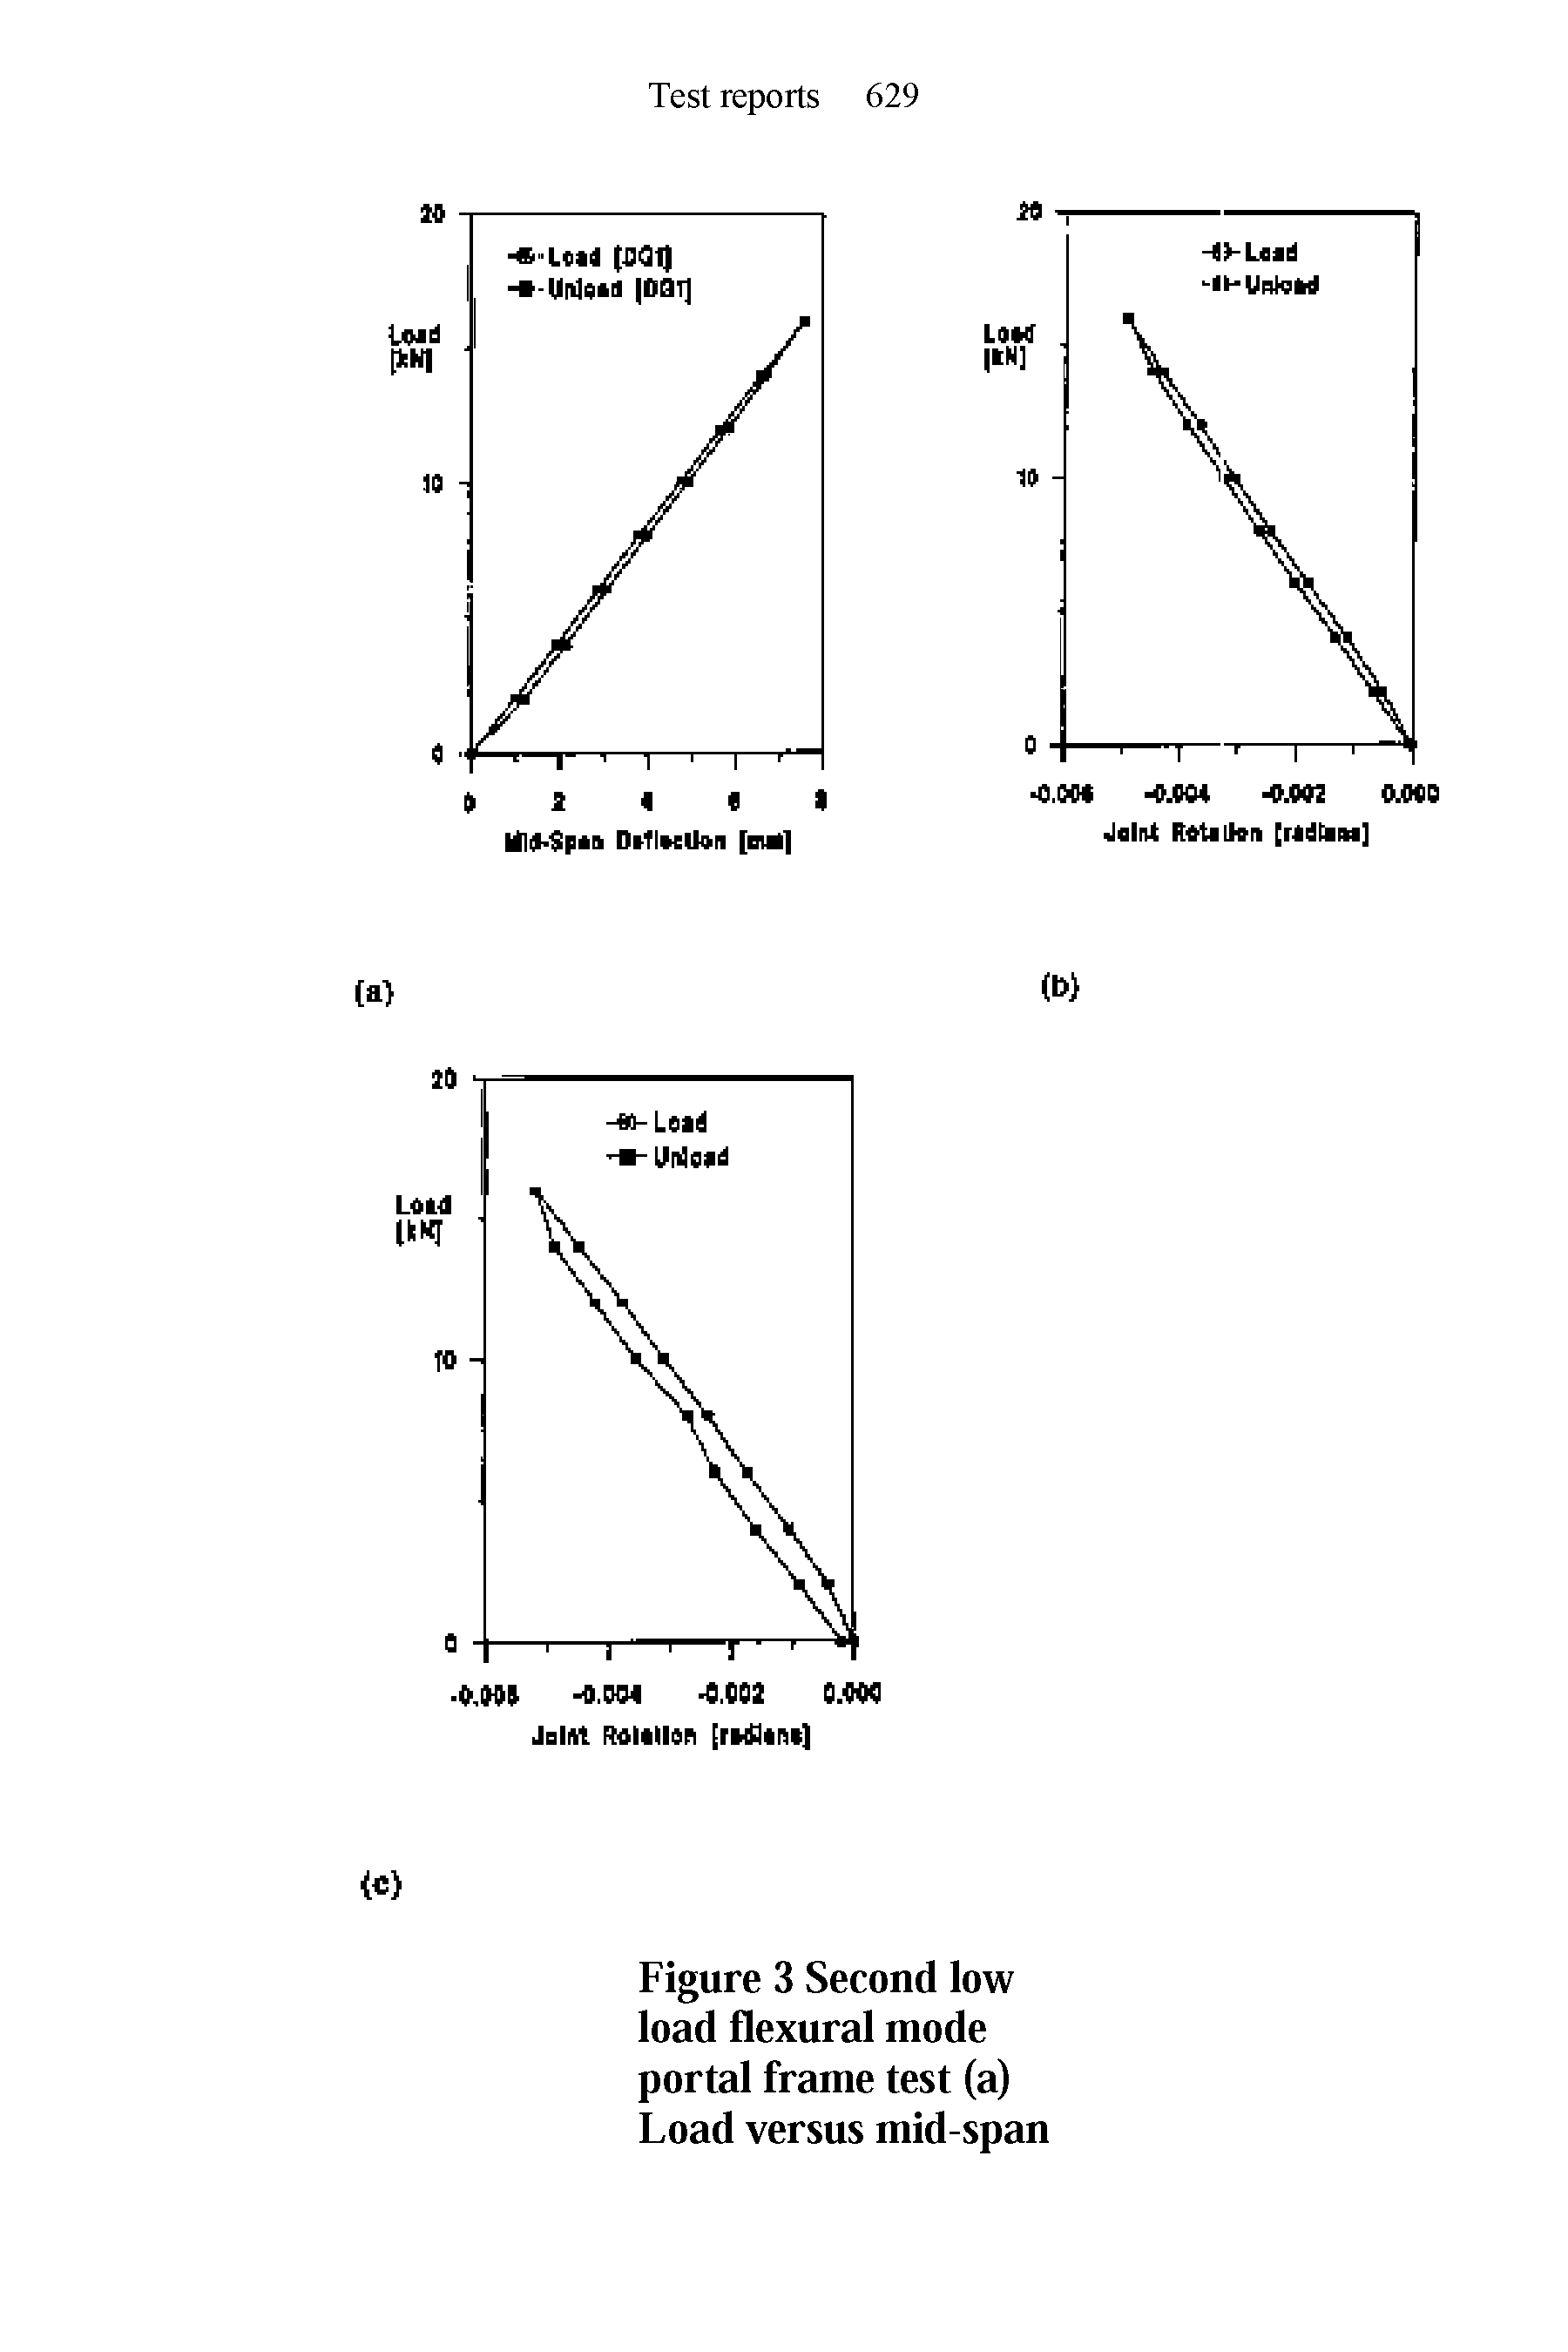 Figure 3 Second low load flexural mode portal frame test (a) Load versus mid-span...